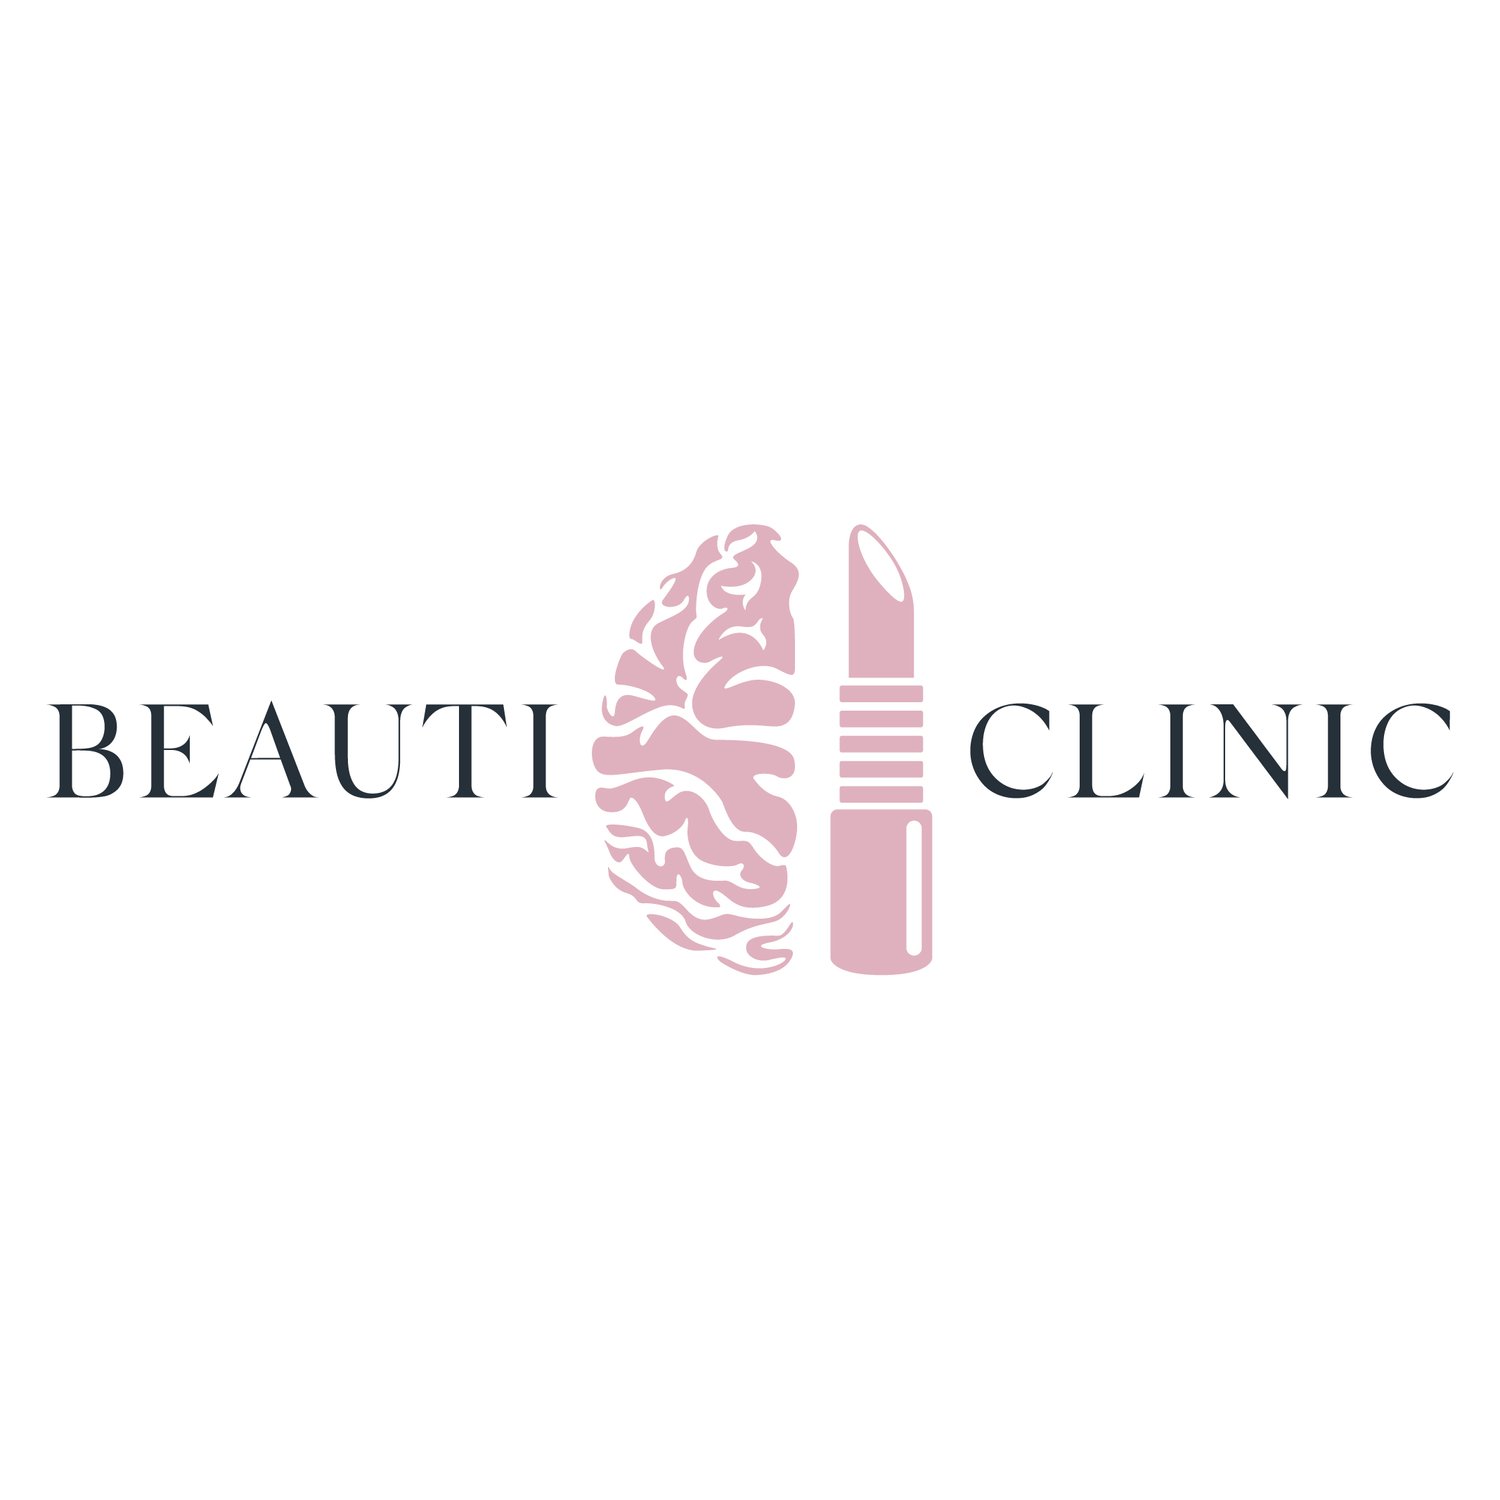 The Beauti Clinic